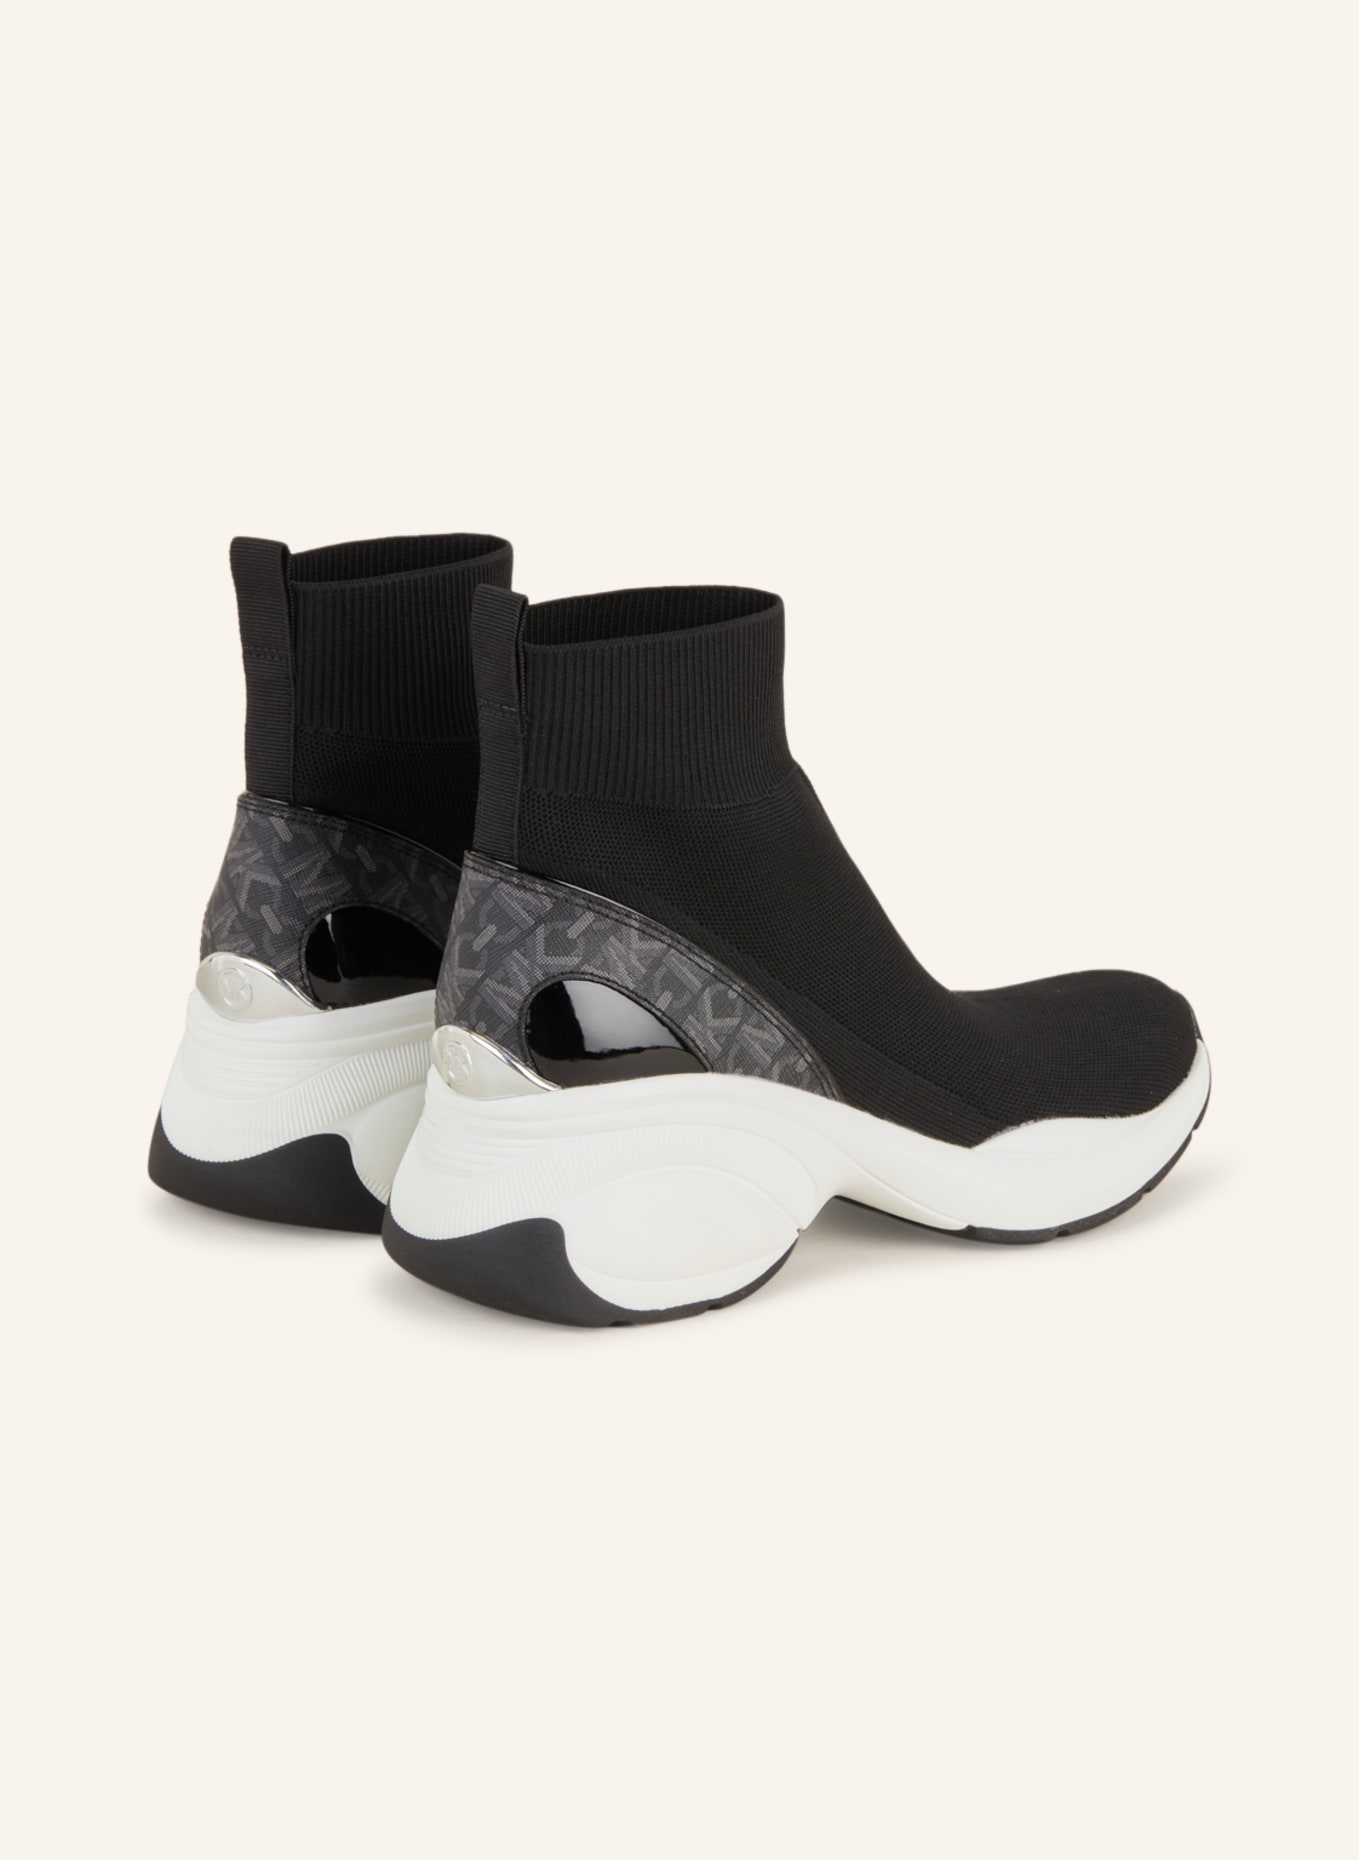 MICHAEL KORS Hightop-Sneaker, Farbe: 001 BLACK LEATHER (Bild 2)